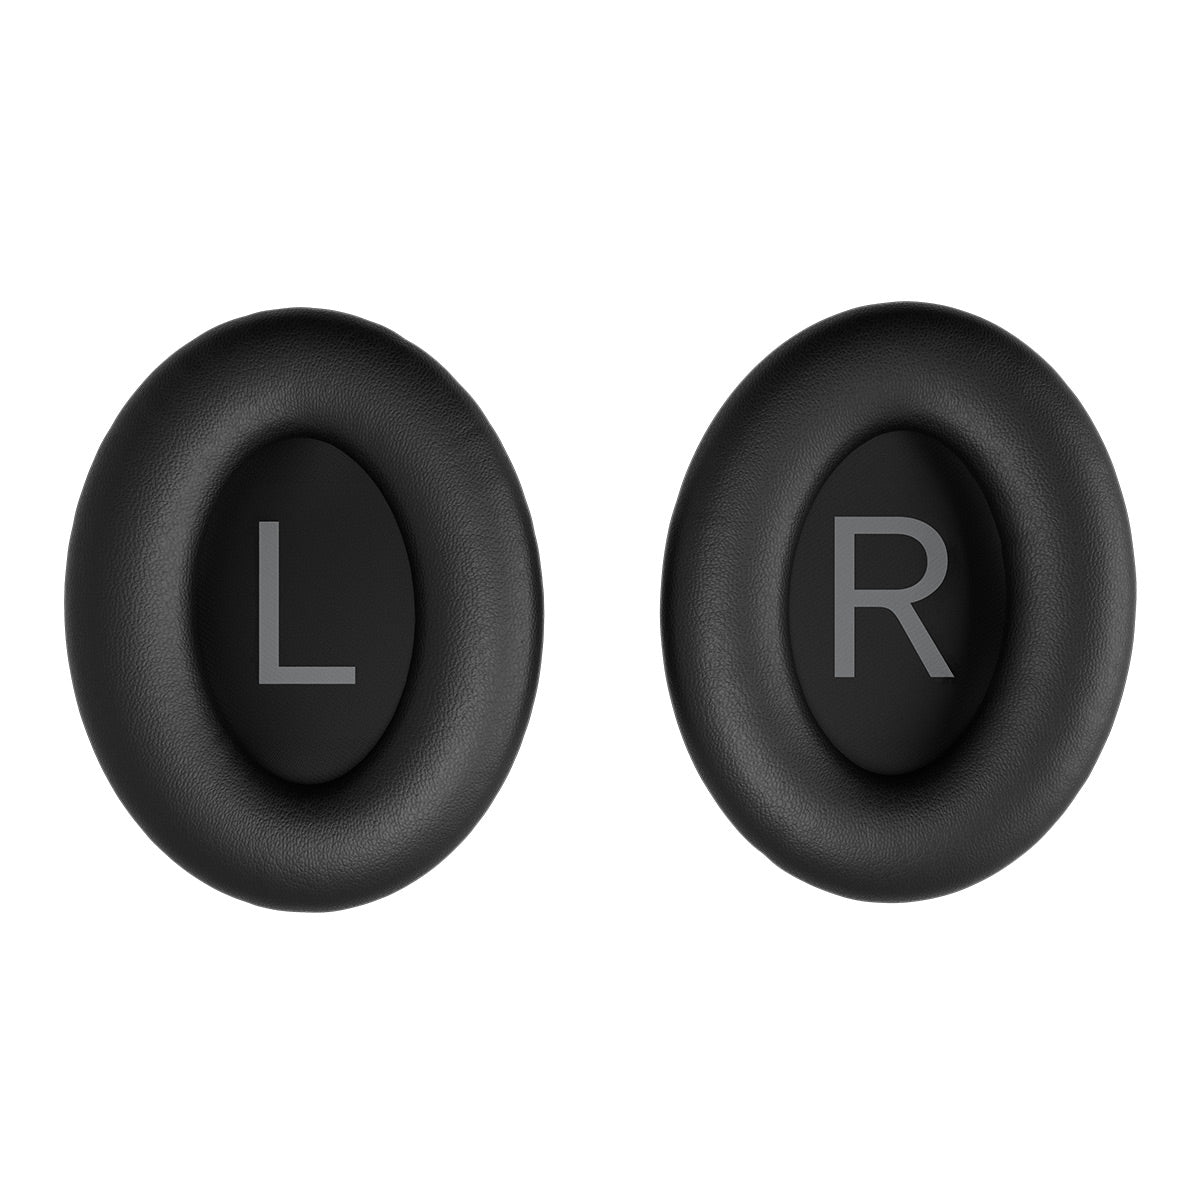 Bose QuietComfort Headphones with Active Noise Cancellation (Black)